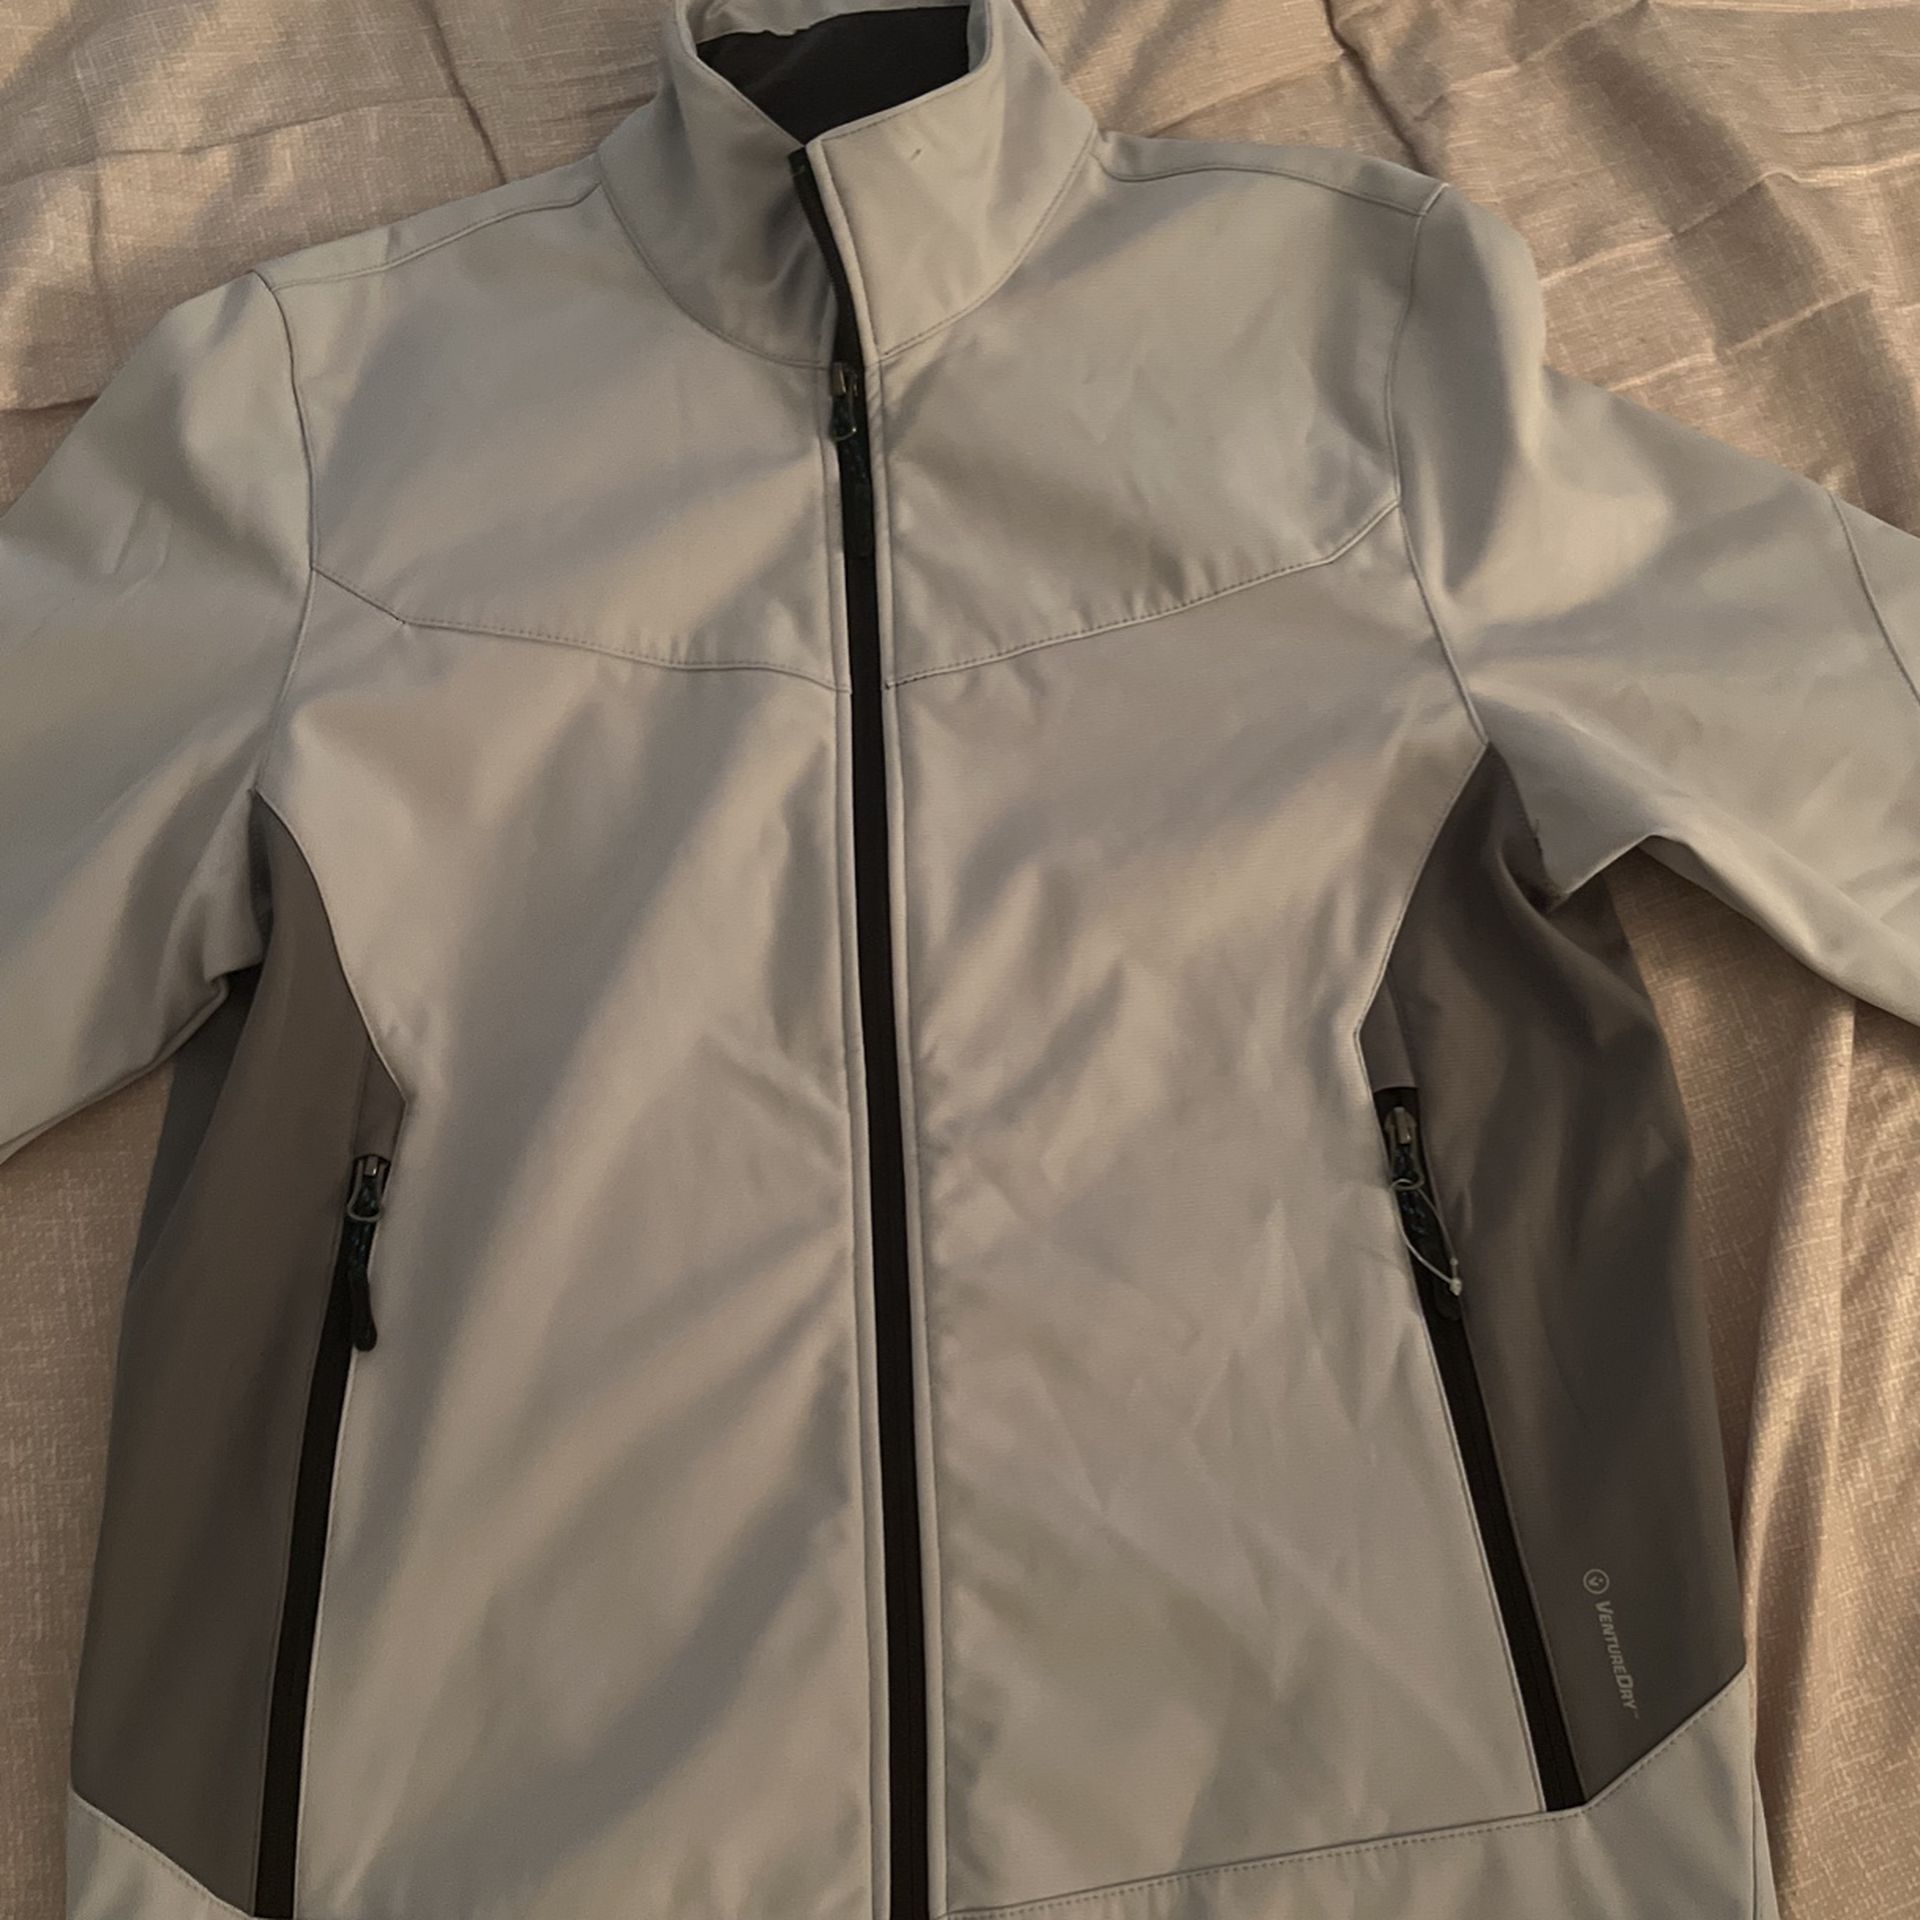 NWT Champion Venture Dry Gray Zip Up Casual Comfort Jacket S/P